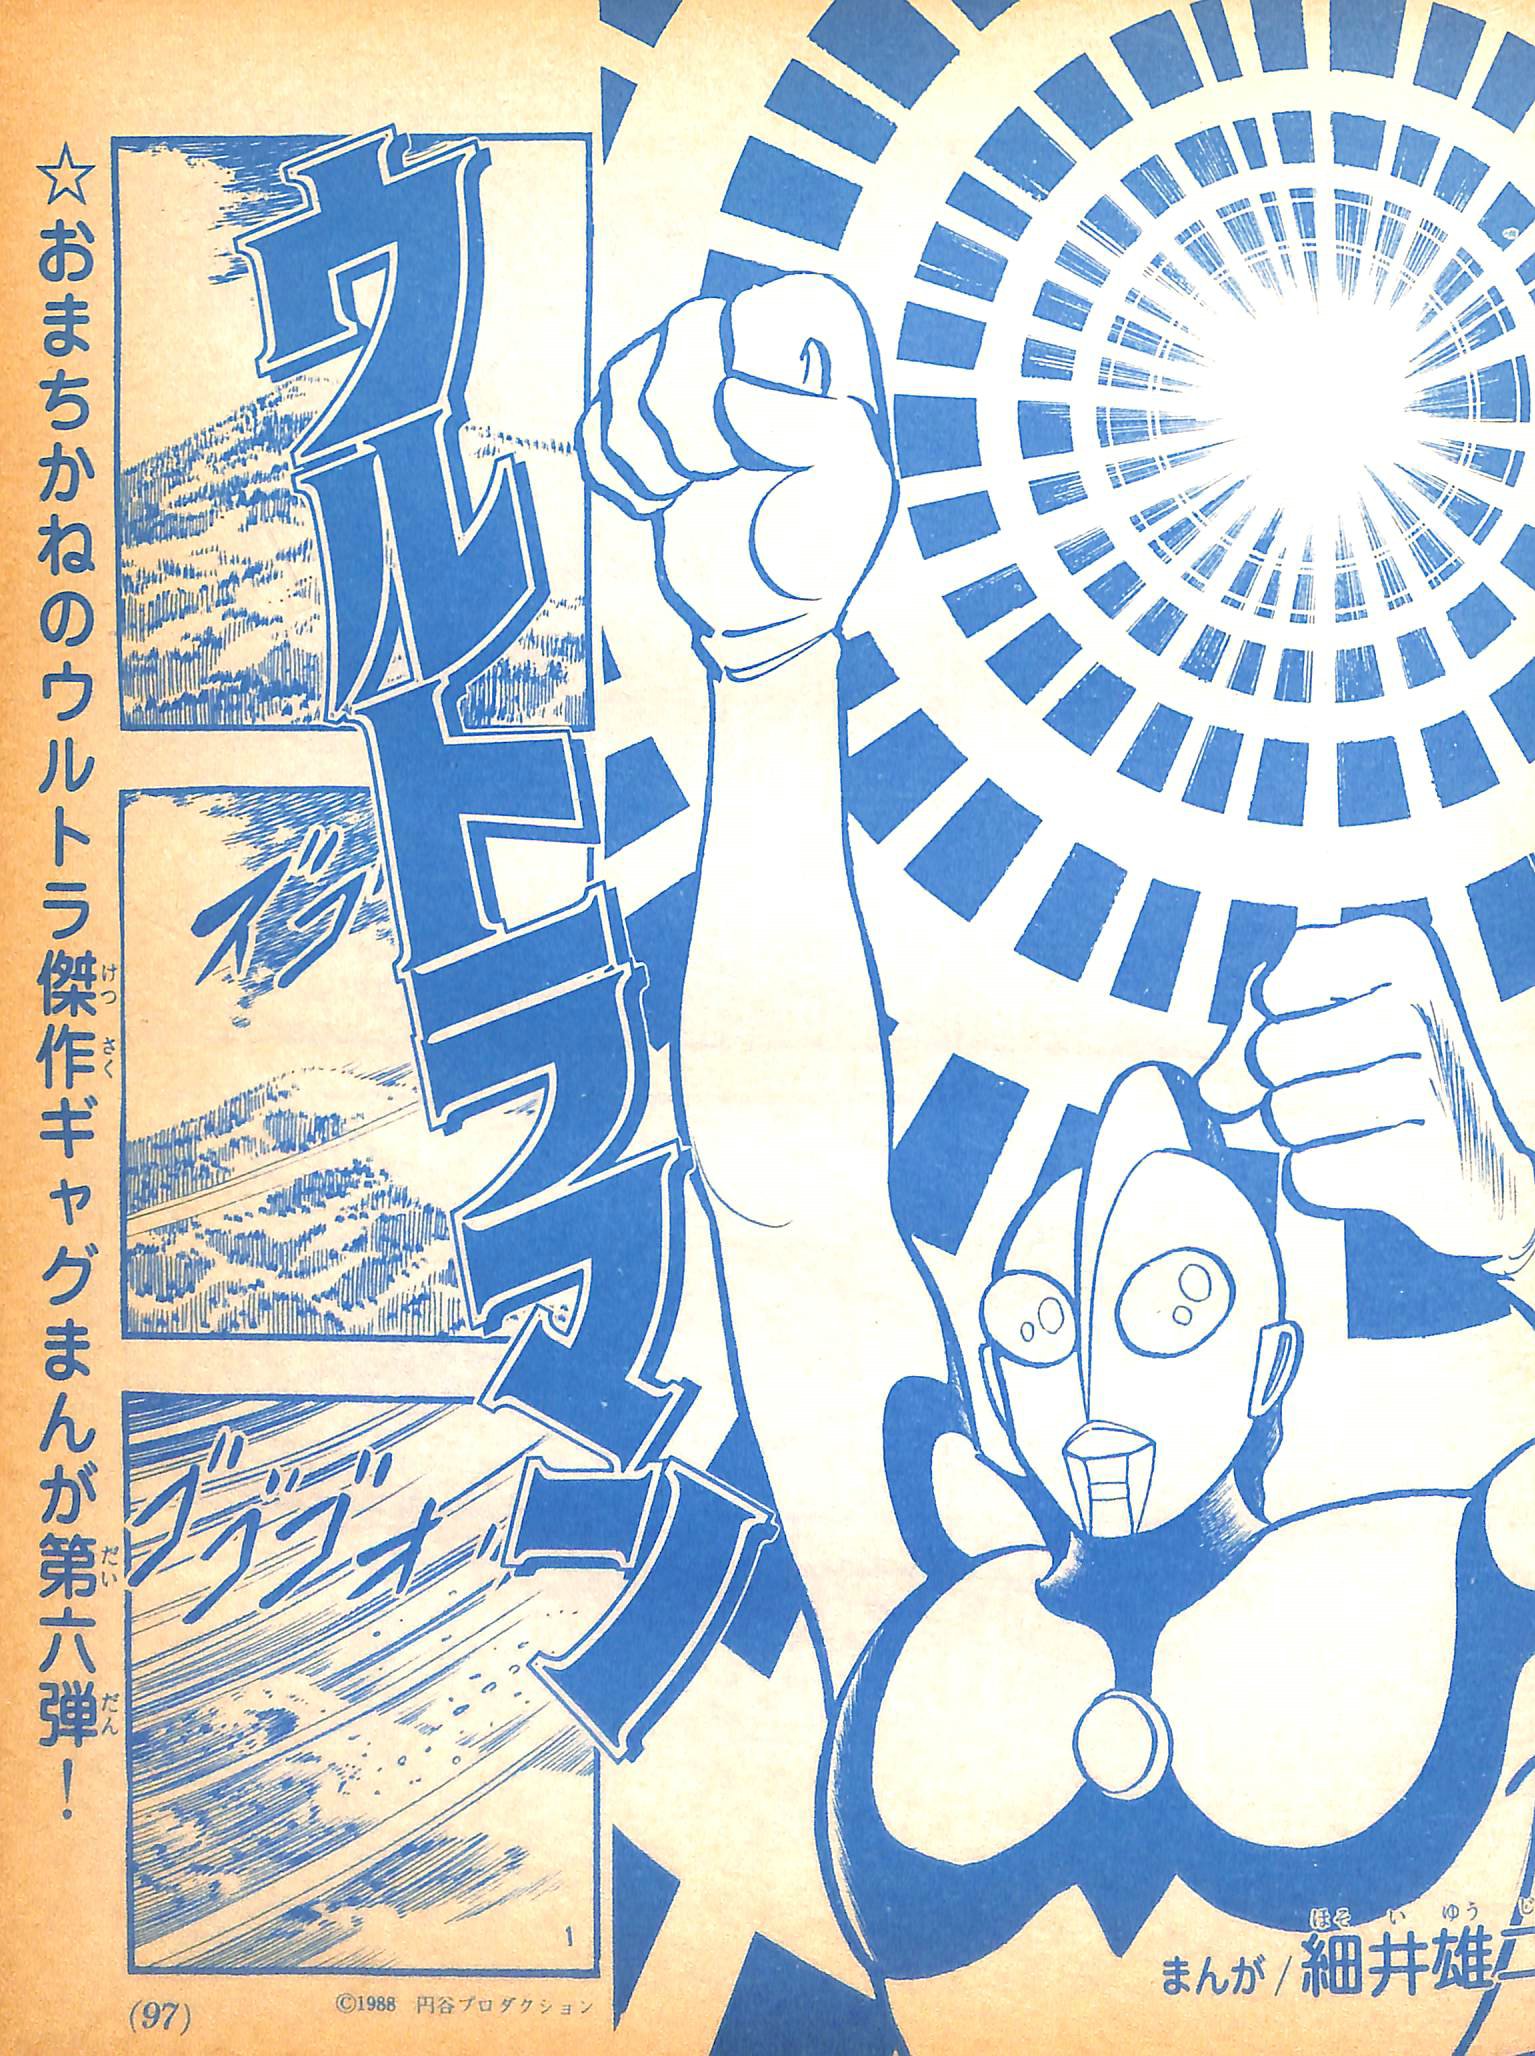 Ultraman (TV Magazine)